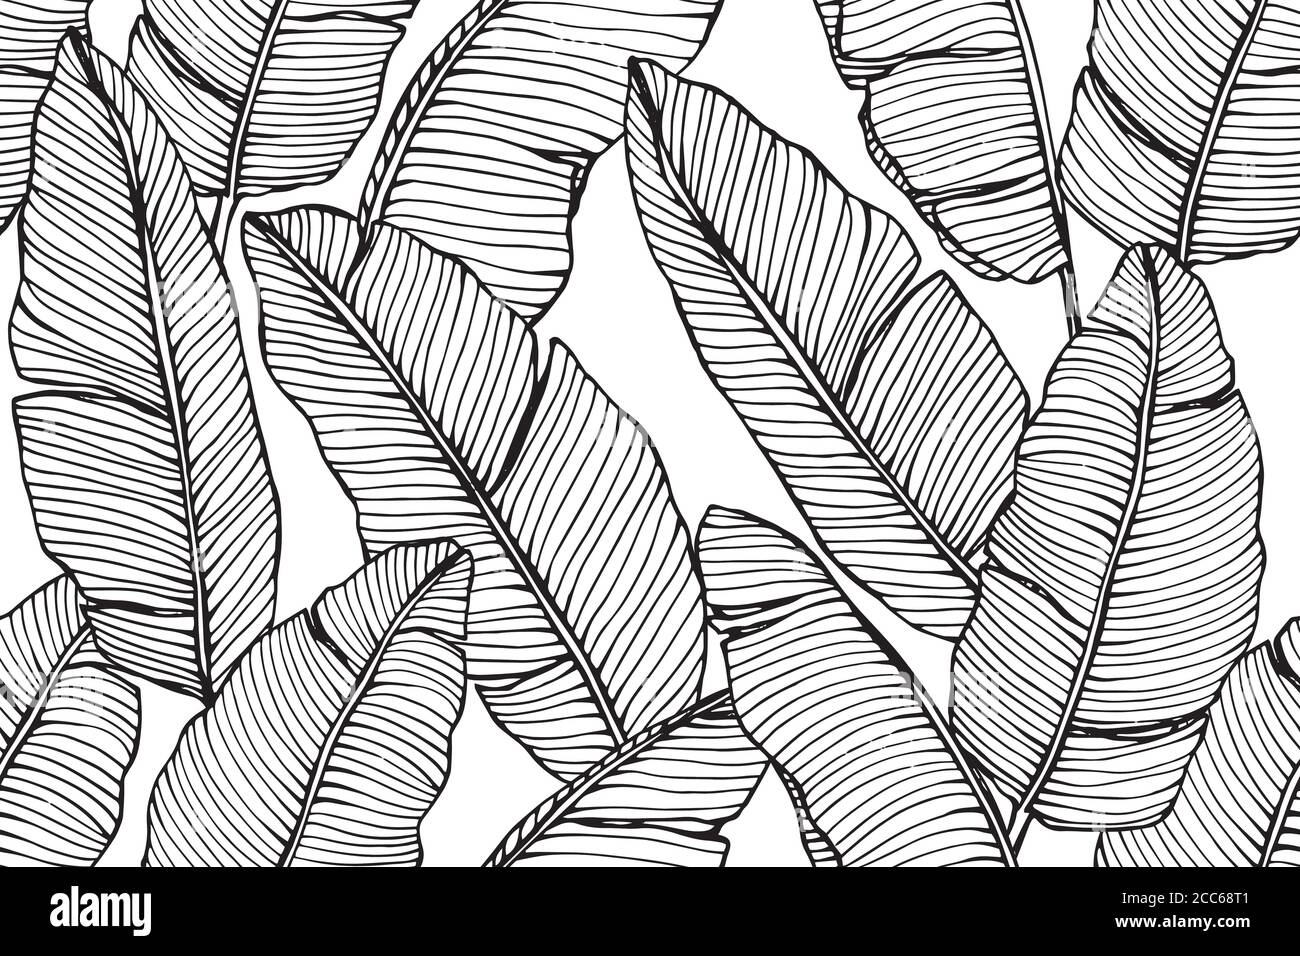 Banana tropical leaves pattern seamless background illustration. Stock Vector